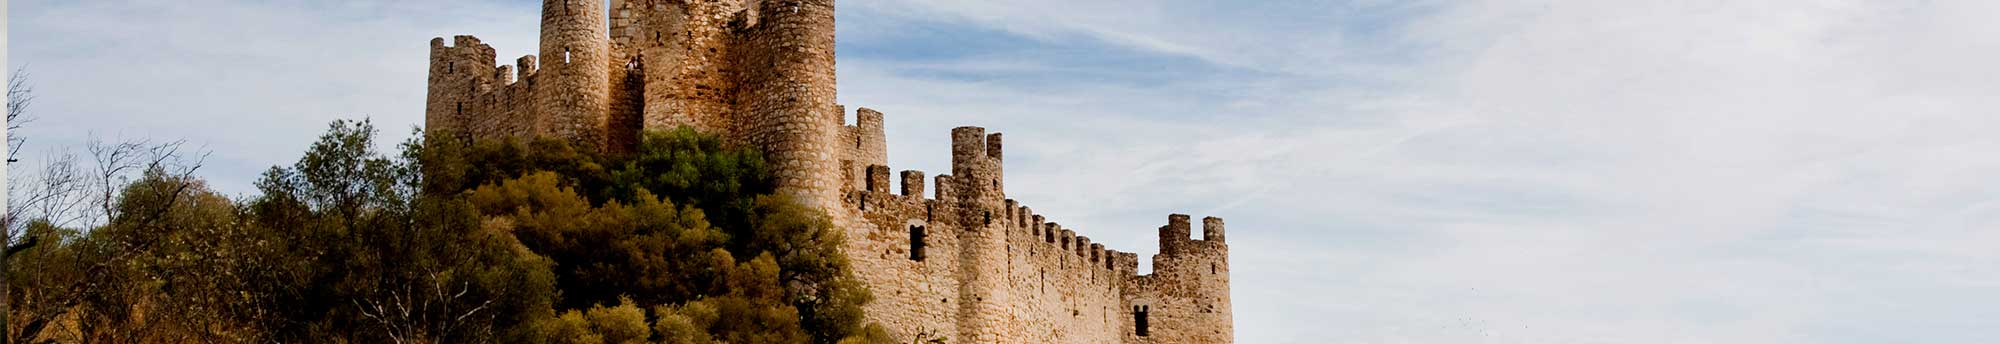 Bilhetes Castelo de Almourol